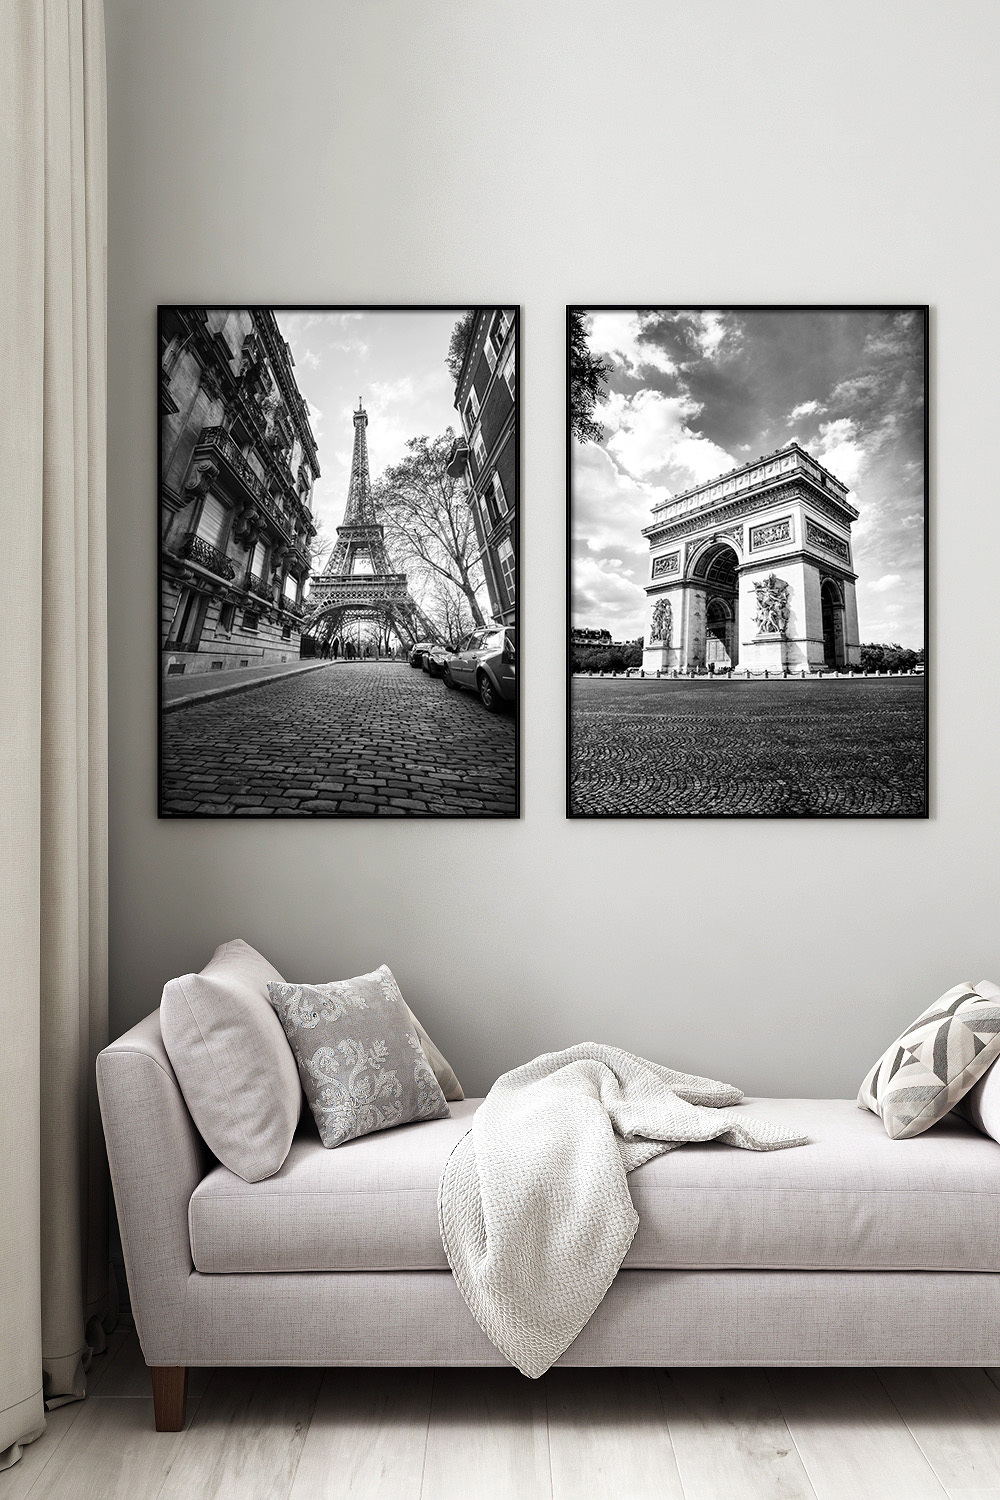 Картинка Париж черно-белый » Черно-белые » Картинки 24 - скачать картинки бесплатно